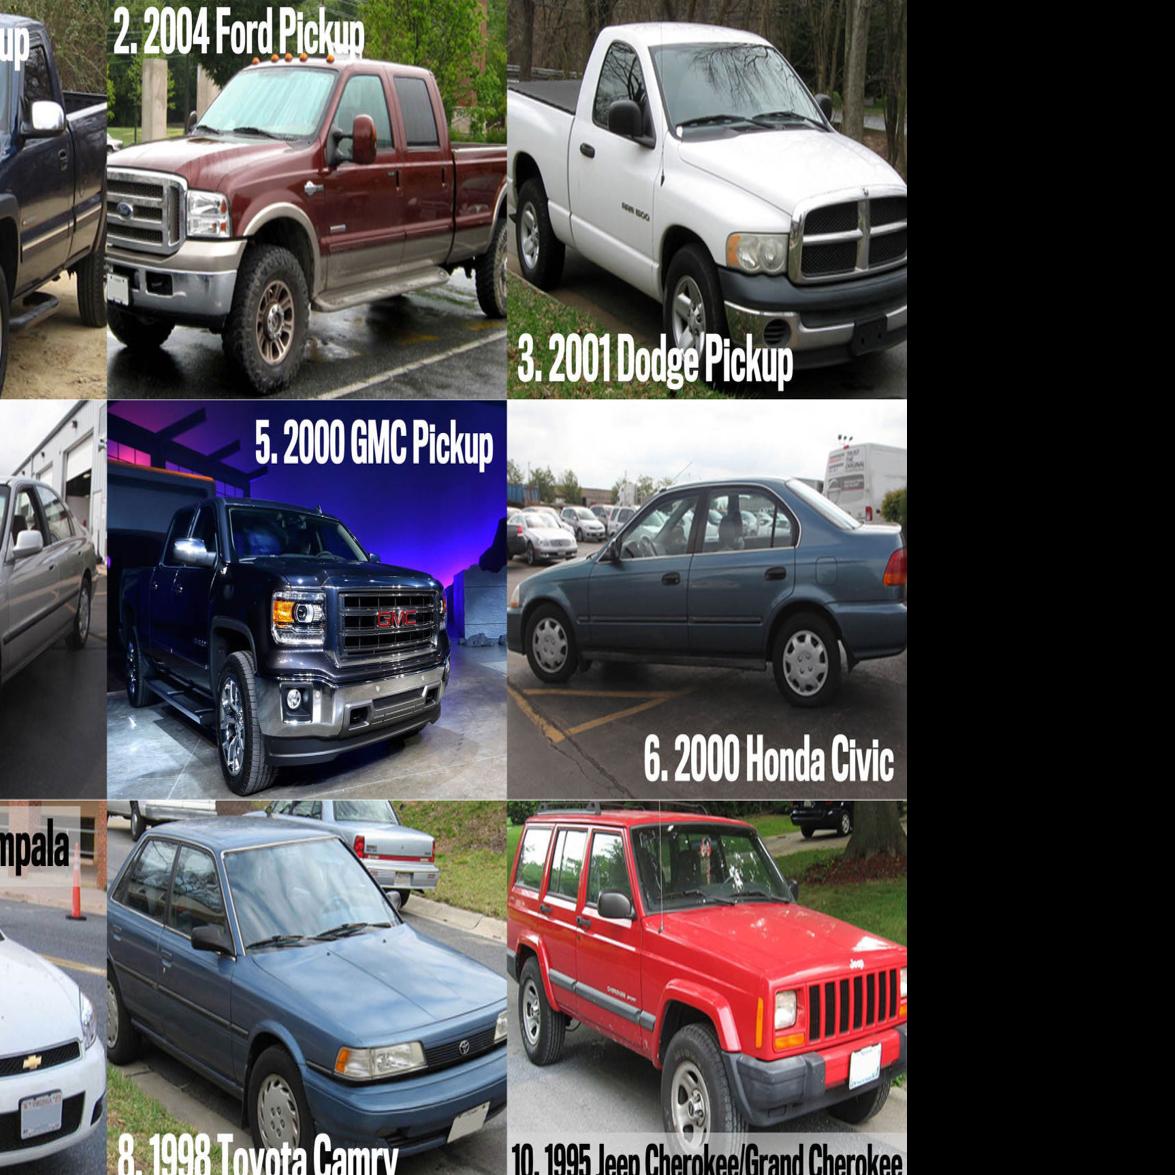 Older Model Pickups Top List Of Most Stolen Vehicles In